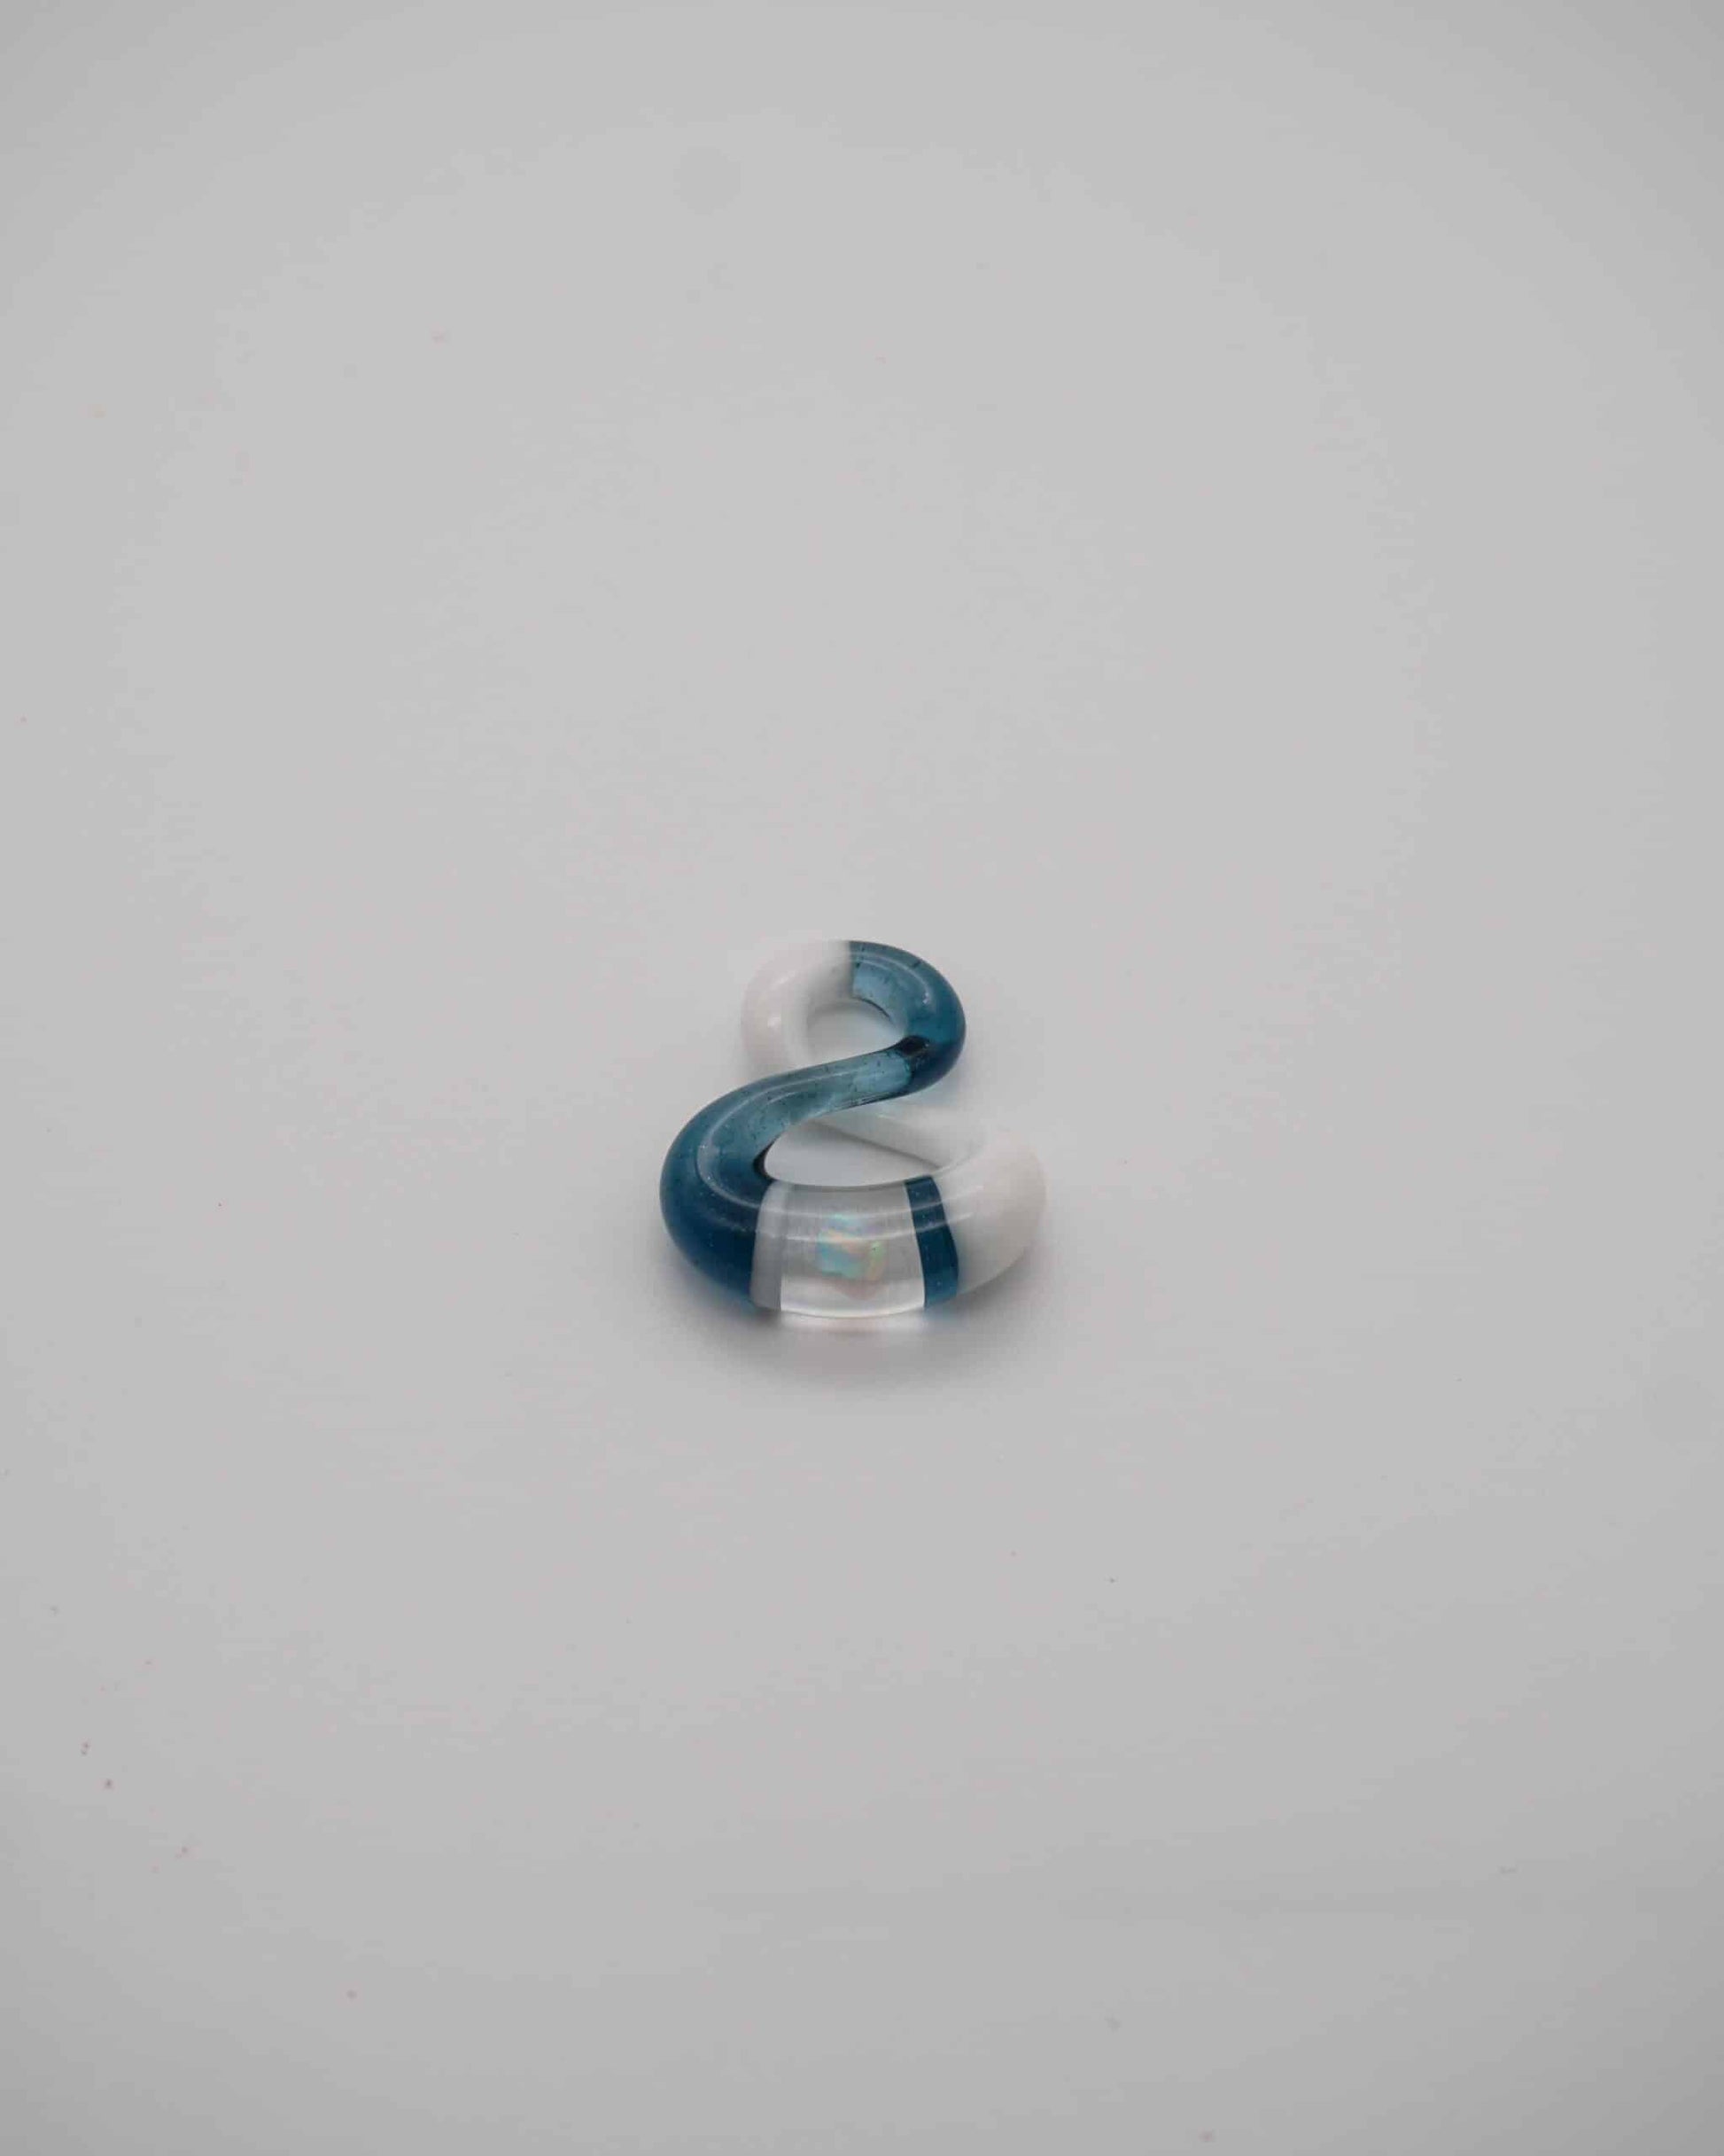 sophisticated glass pendant - Aqua/White Mini Infinity Pendant by Nateylove